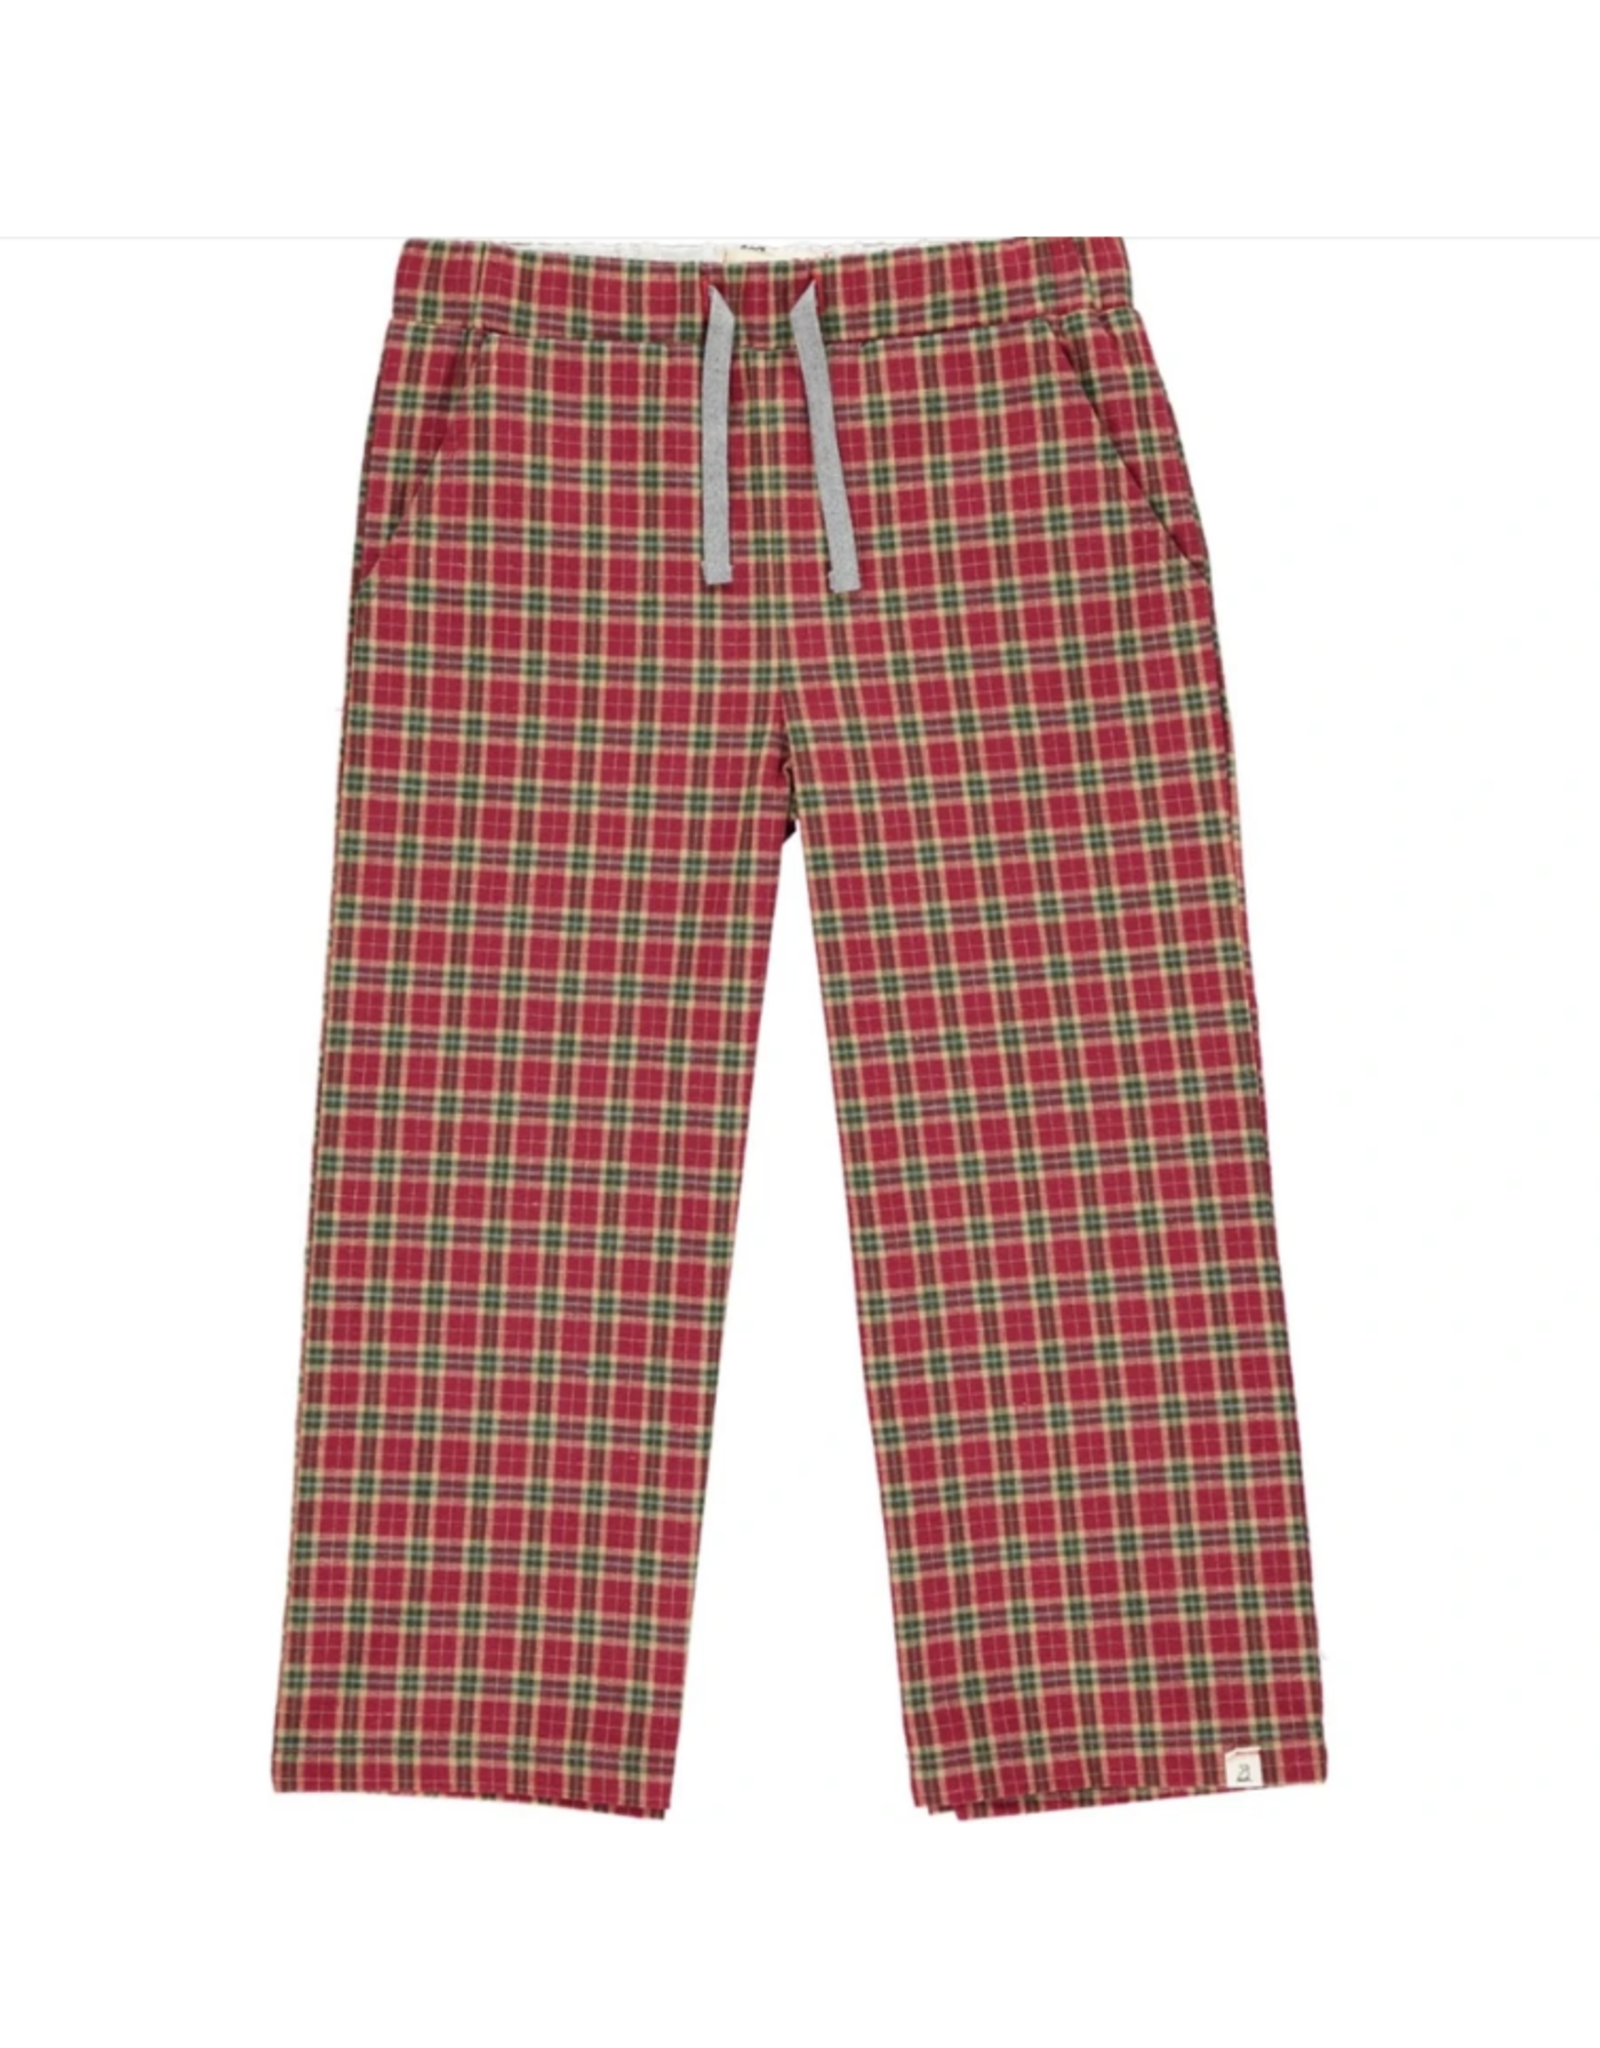 Me & Henry Boy's Rockford Louge Pants-Red/Brown Plaid